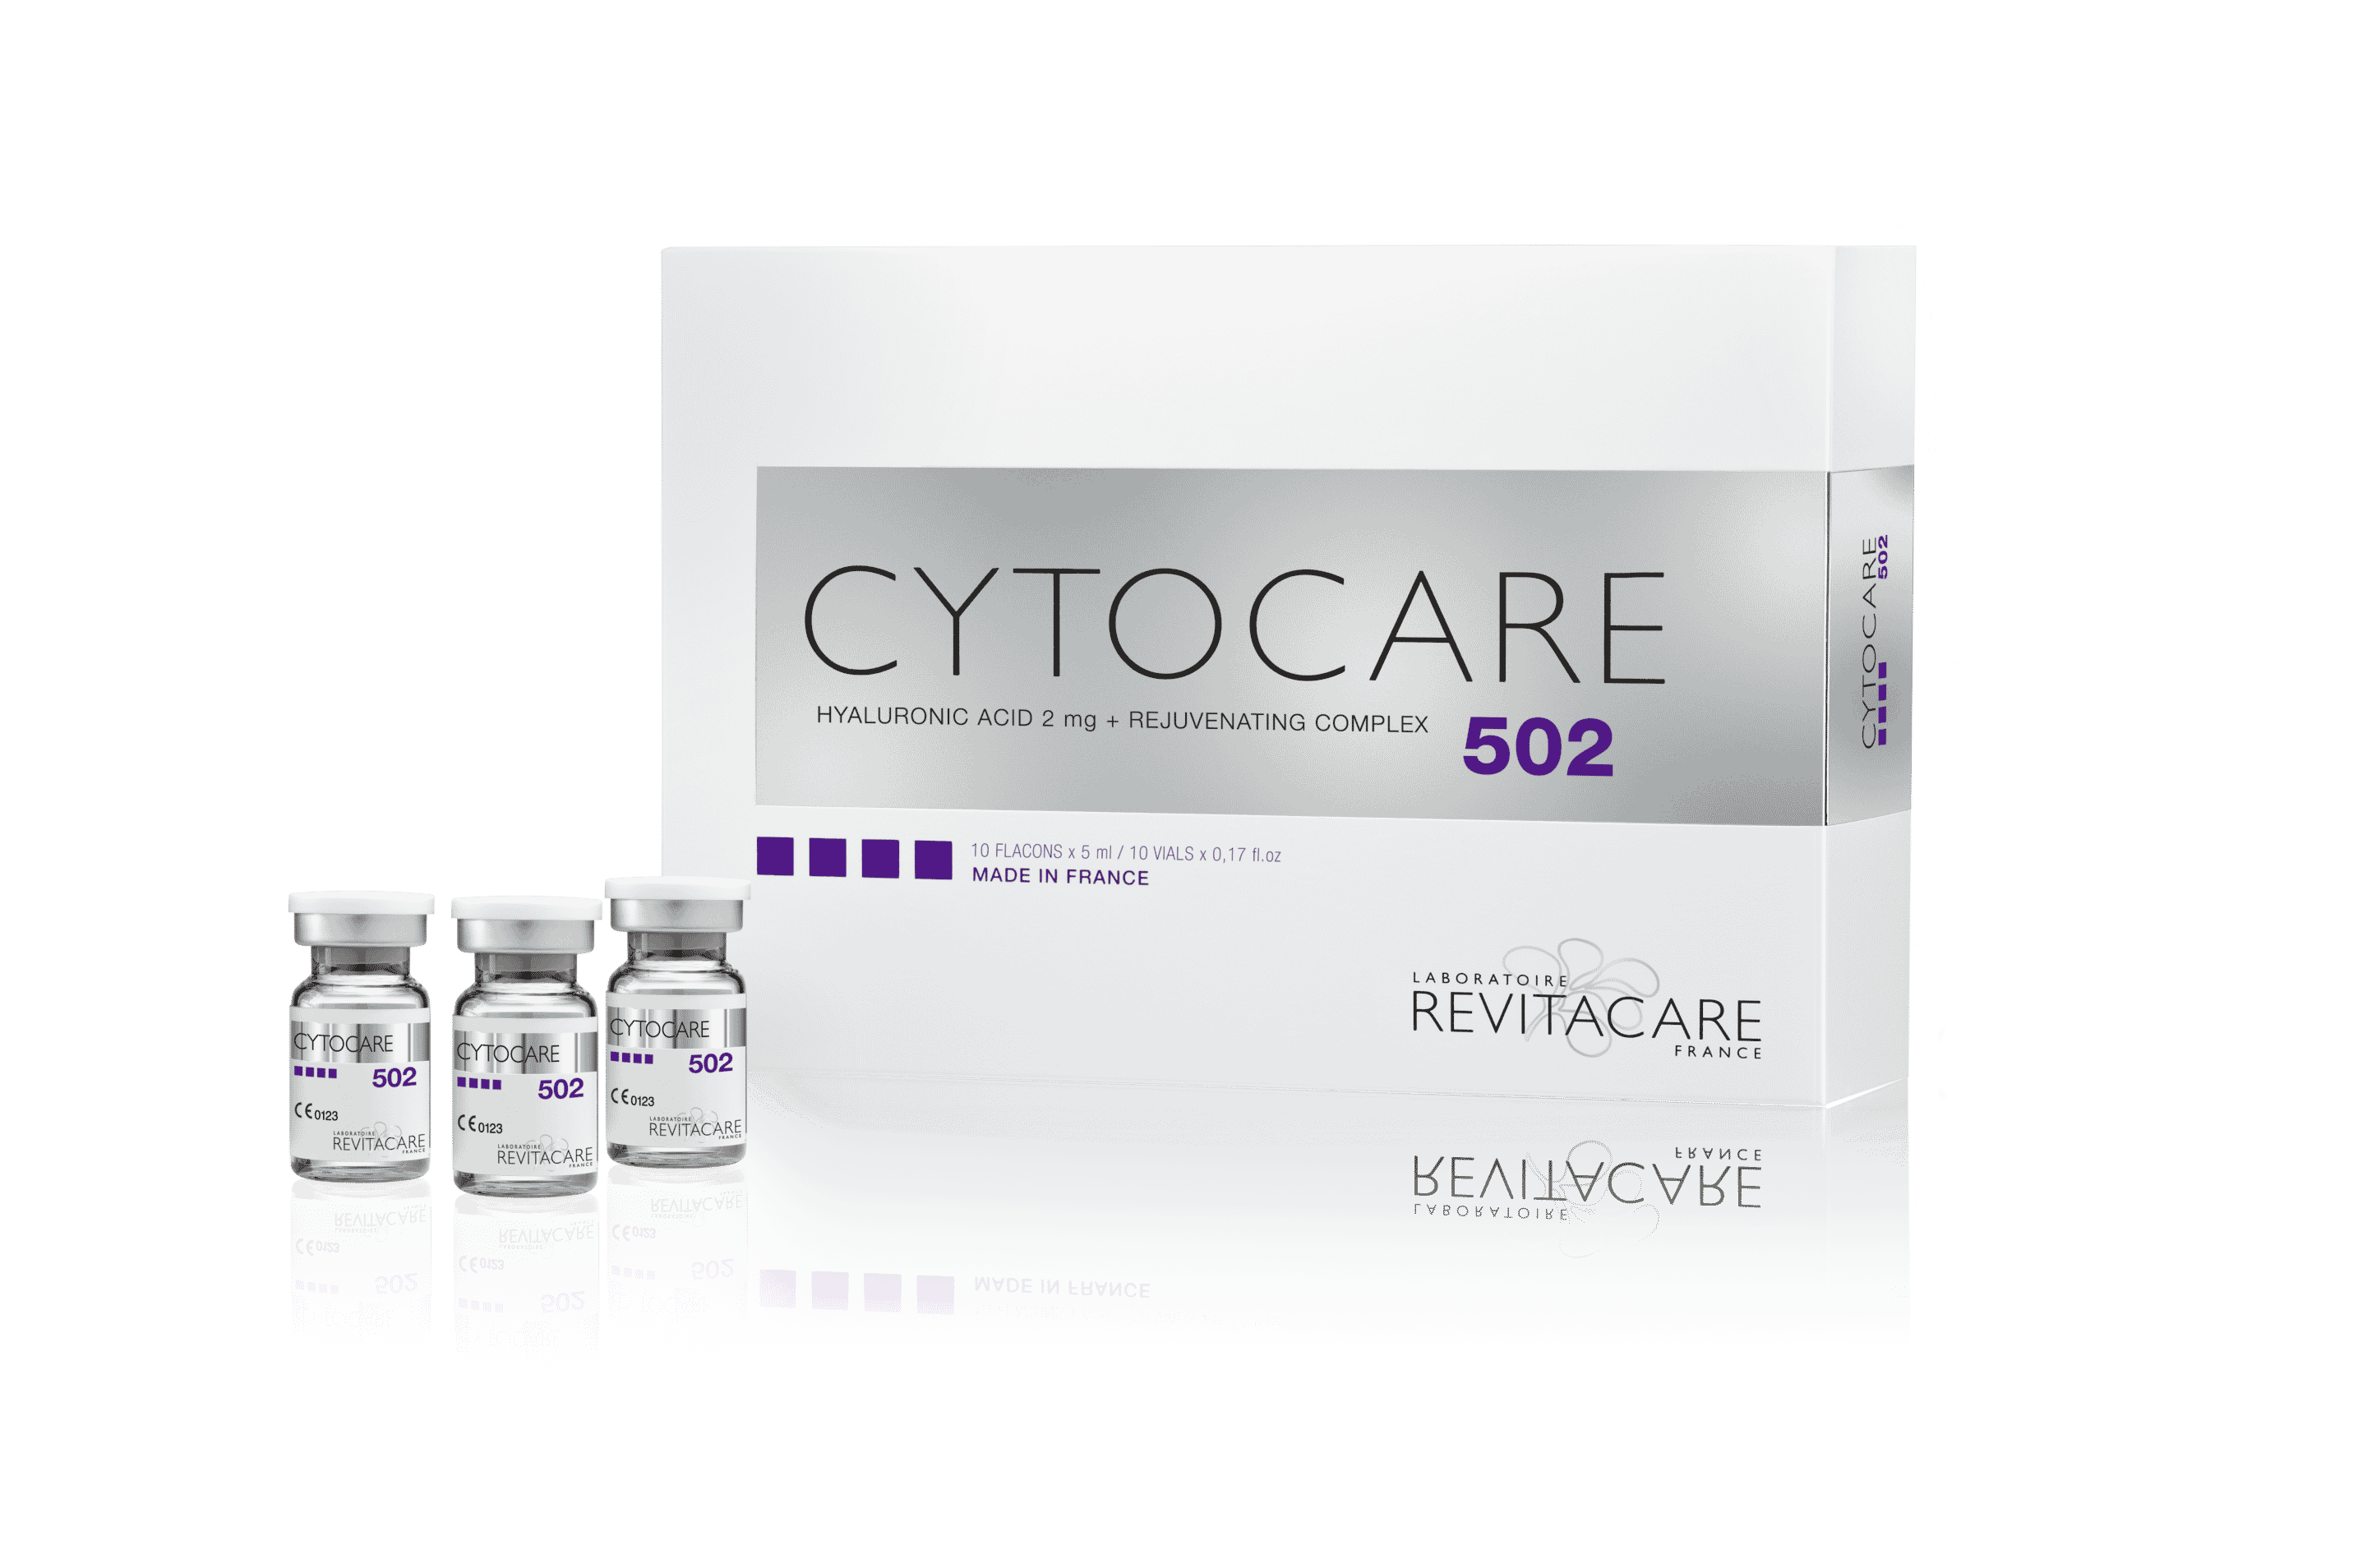 Cytocare 502 Hyaluronic acid + Rejuvenating complex